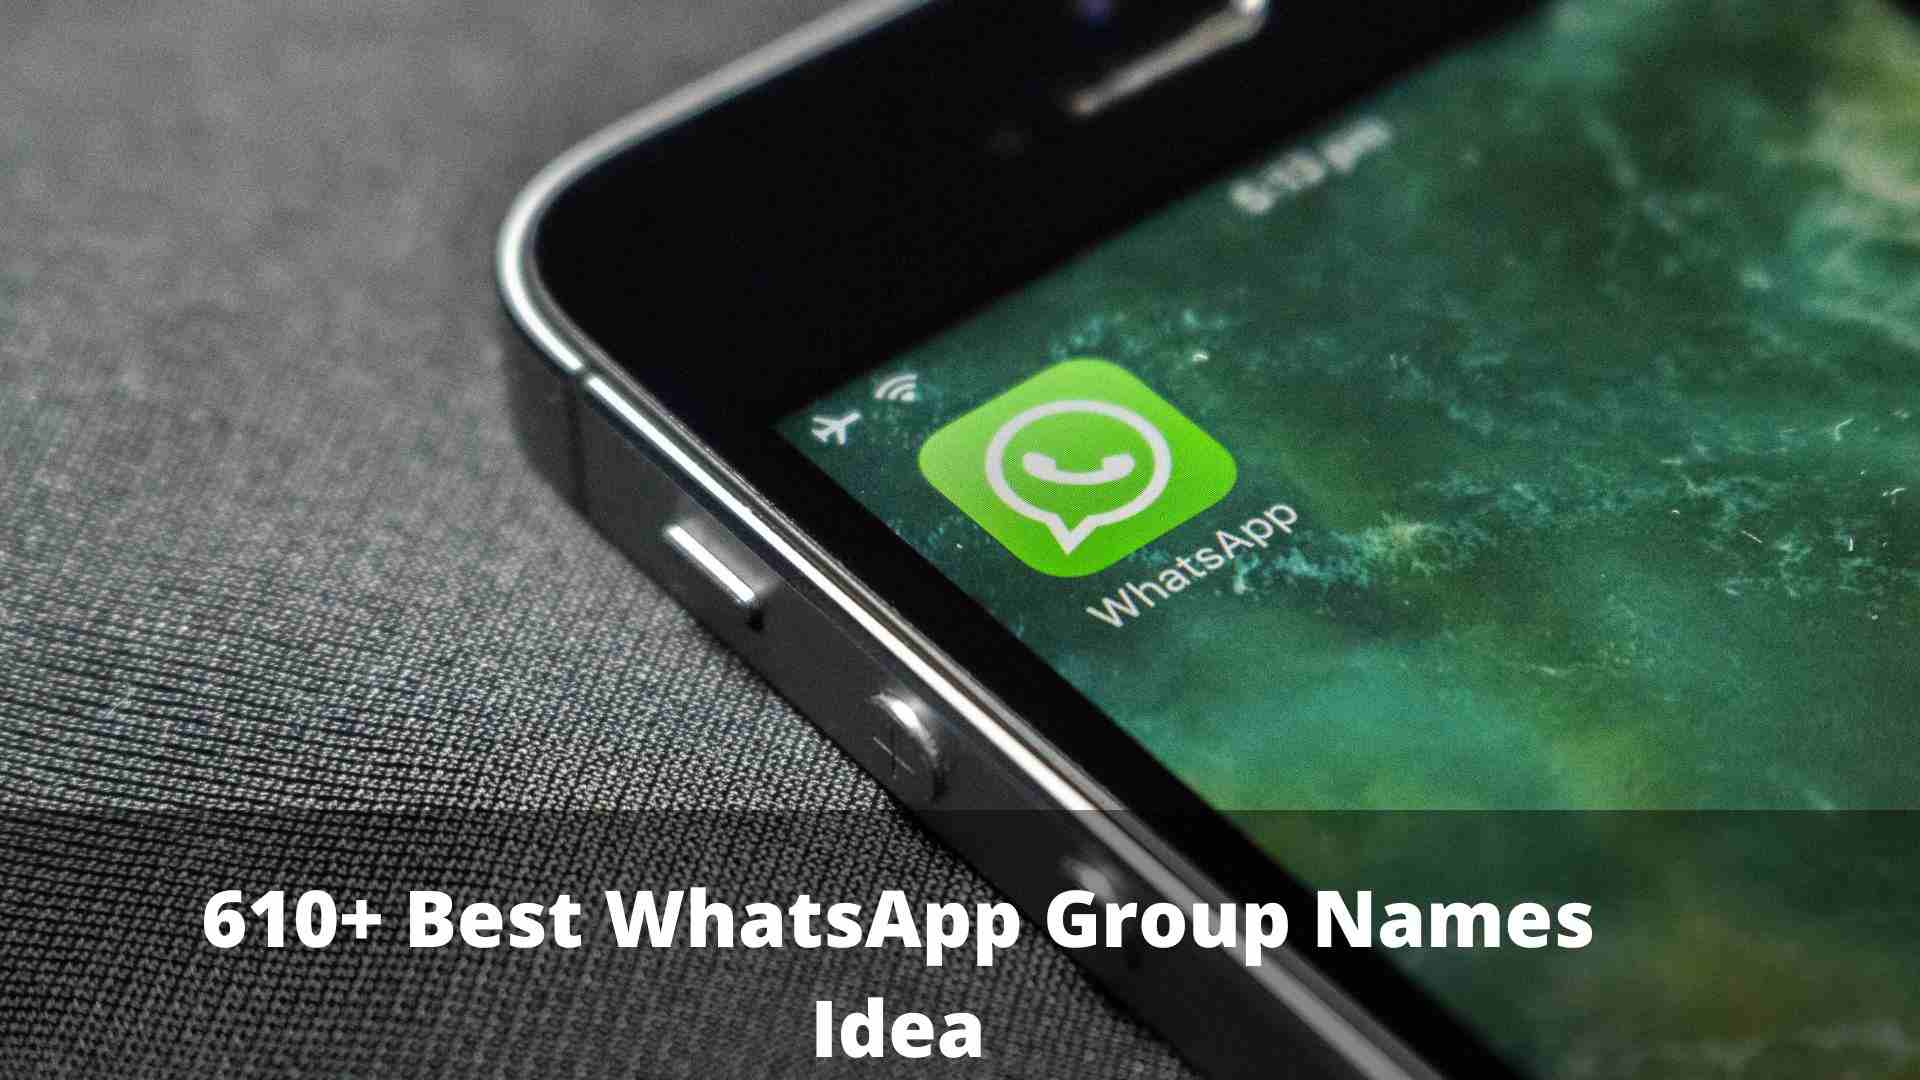 WhatsApp Group Names for Friends idea